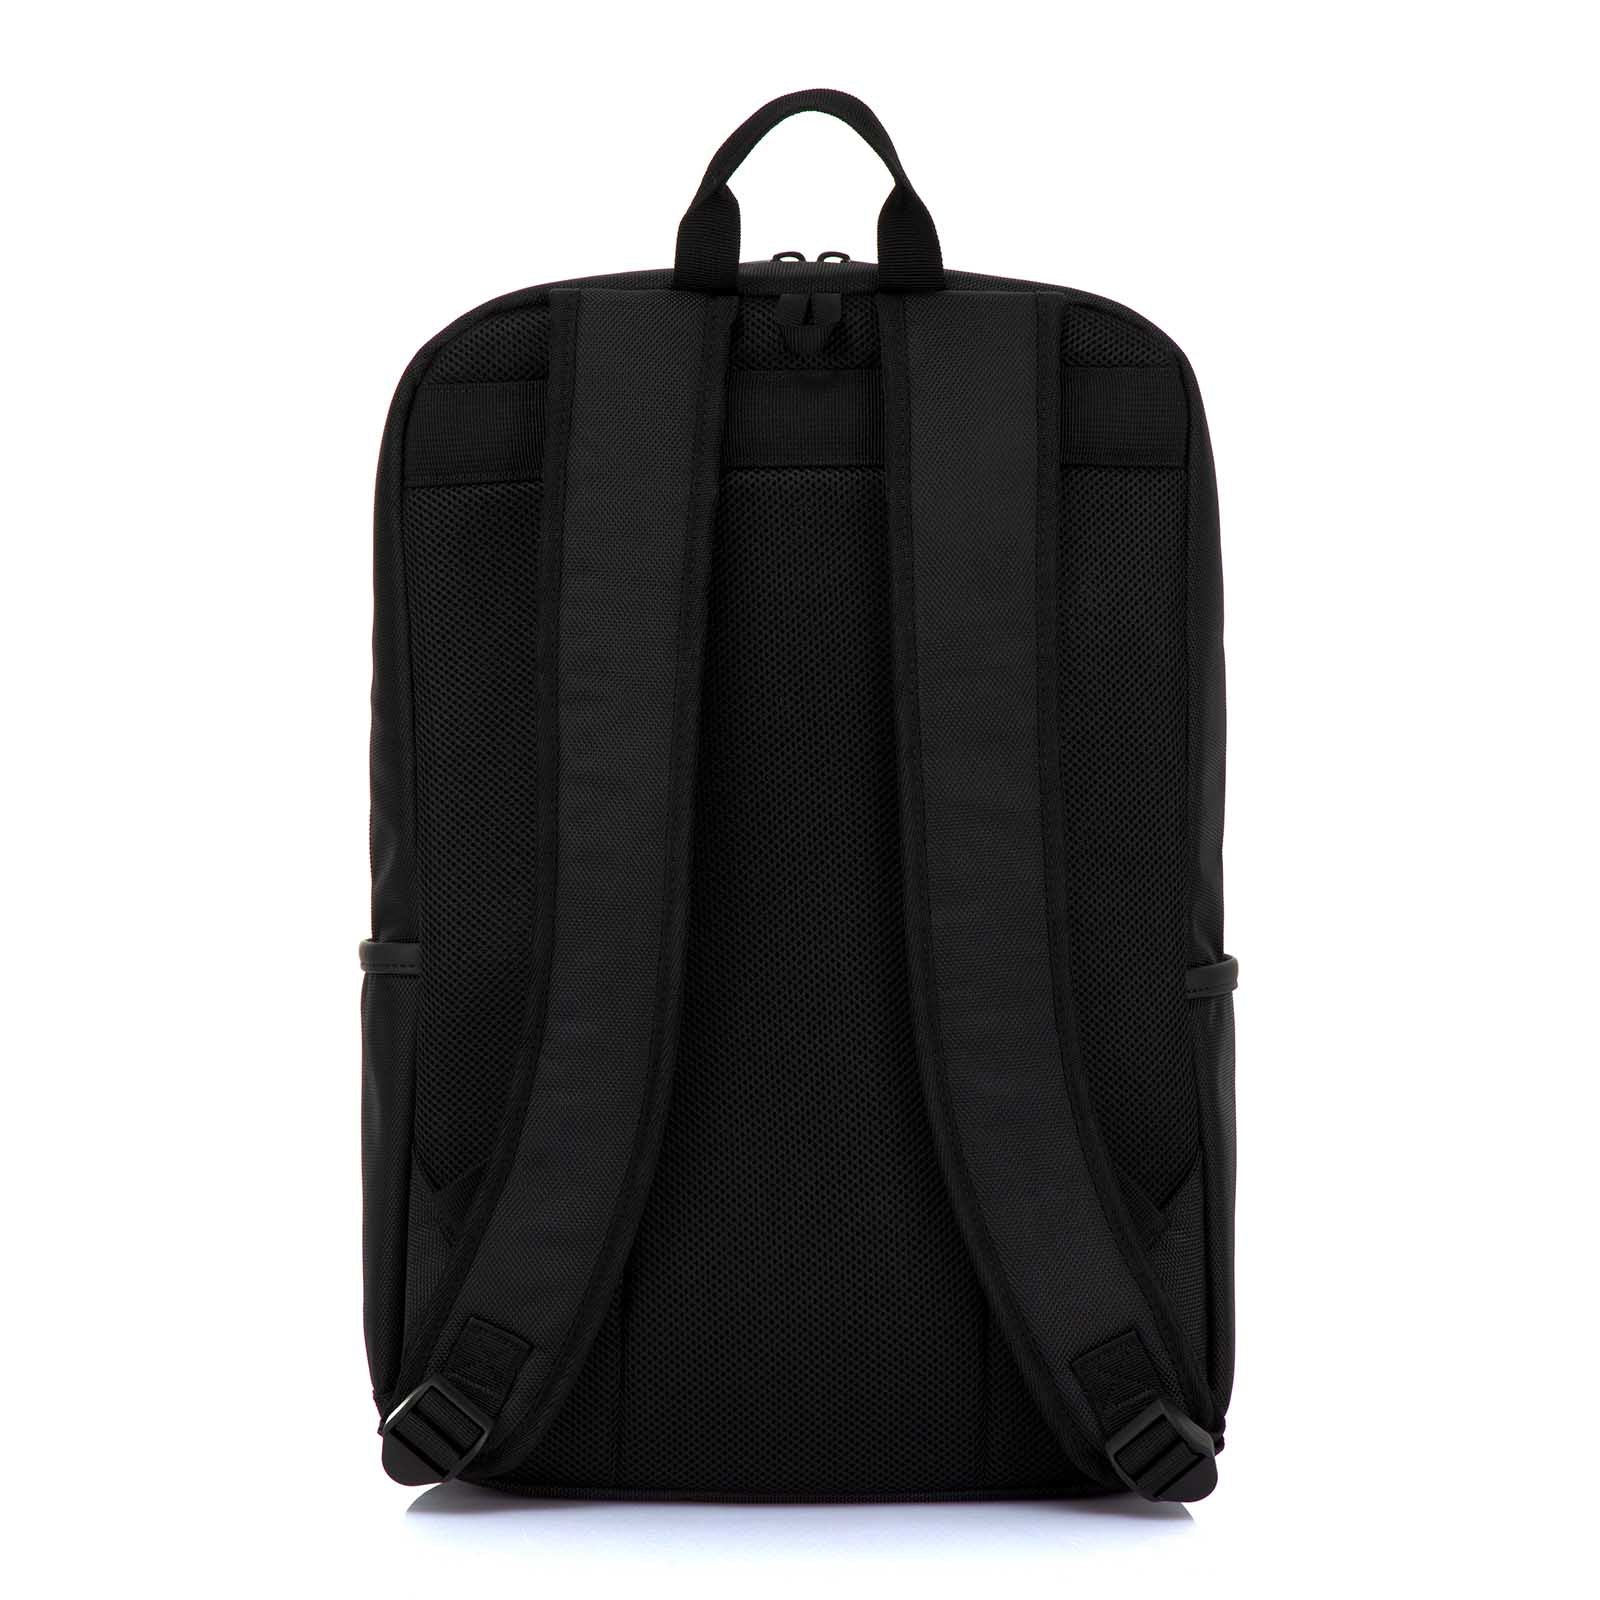 American-Tourister-Kamden-15-Inch-Laptop-Backpack-Black-Harness